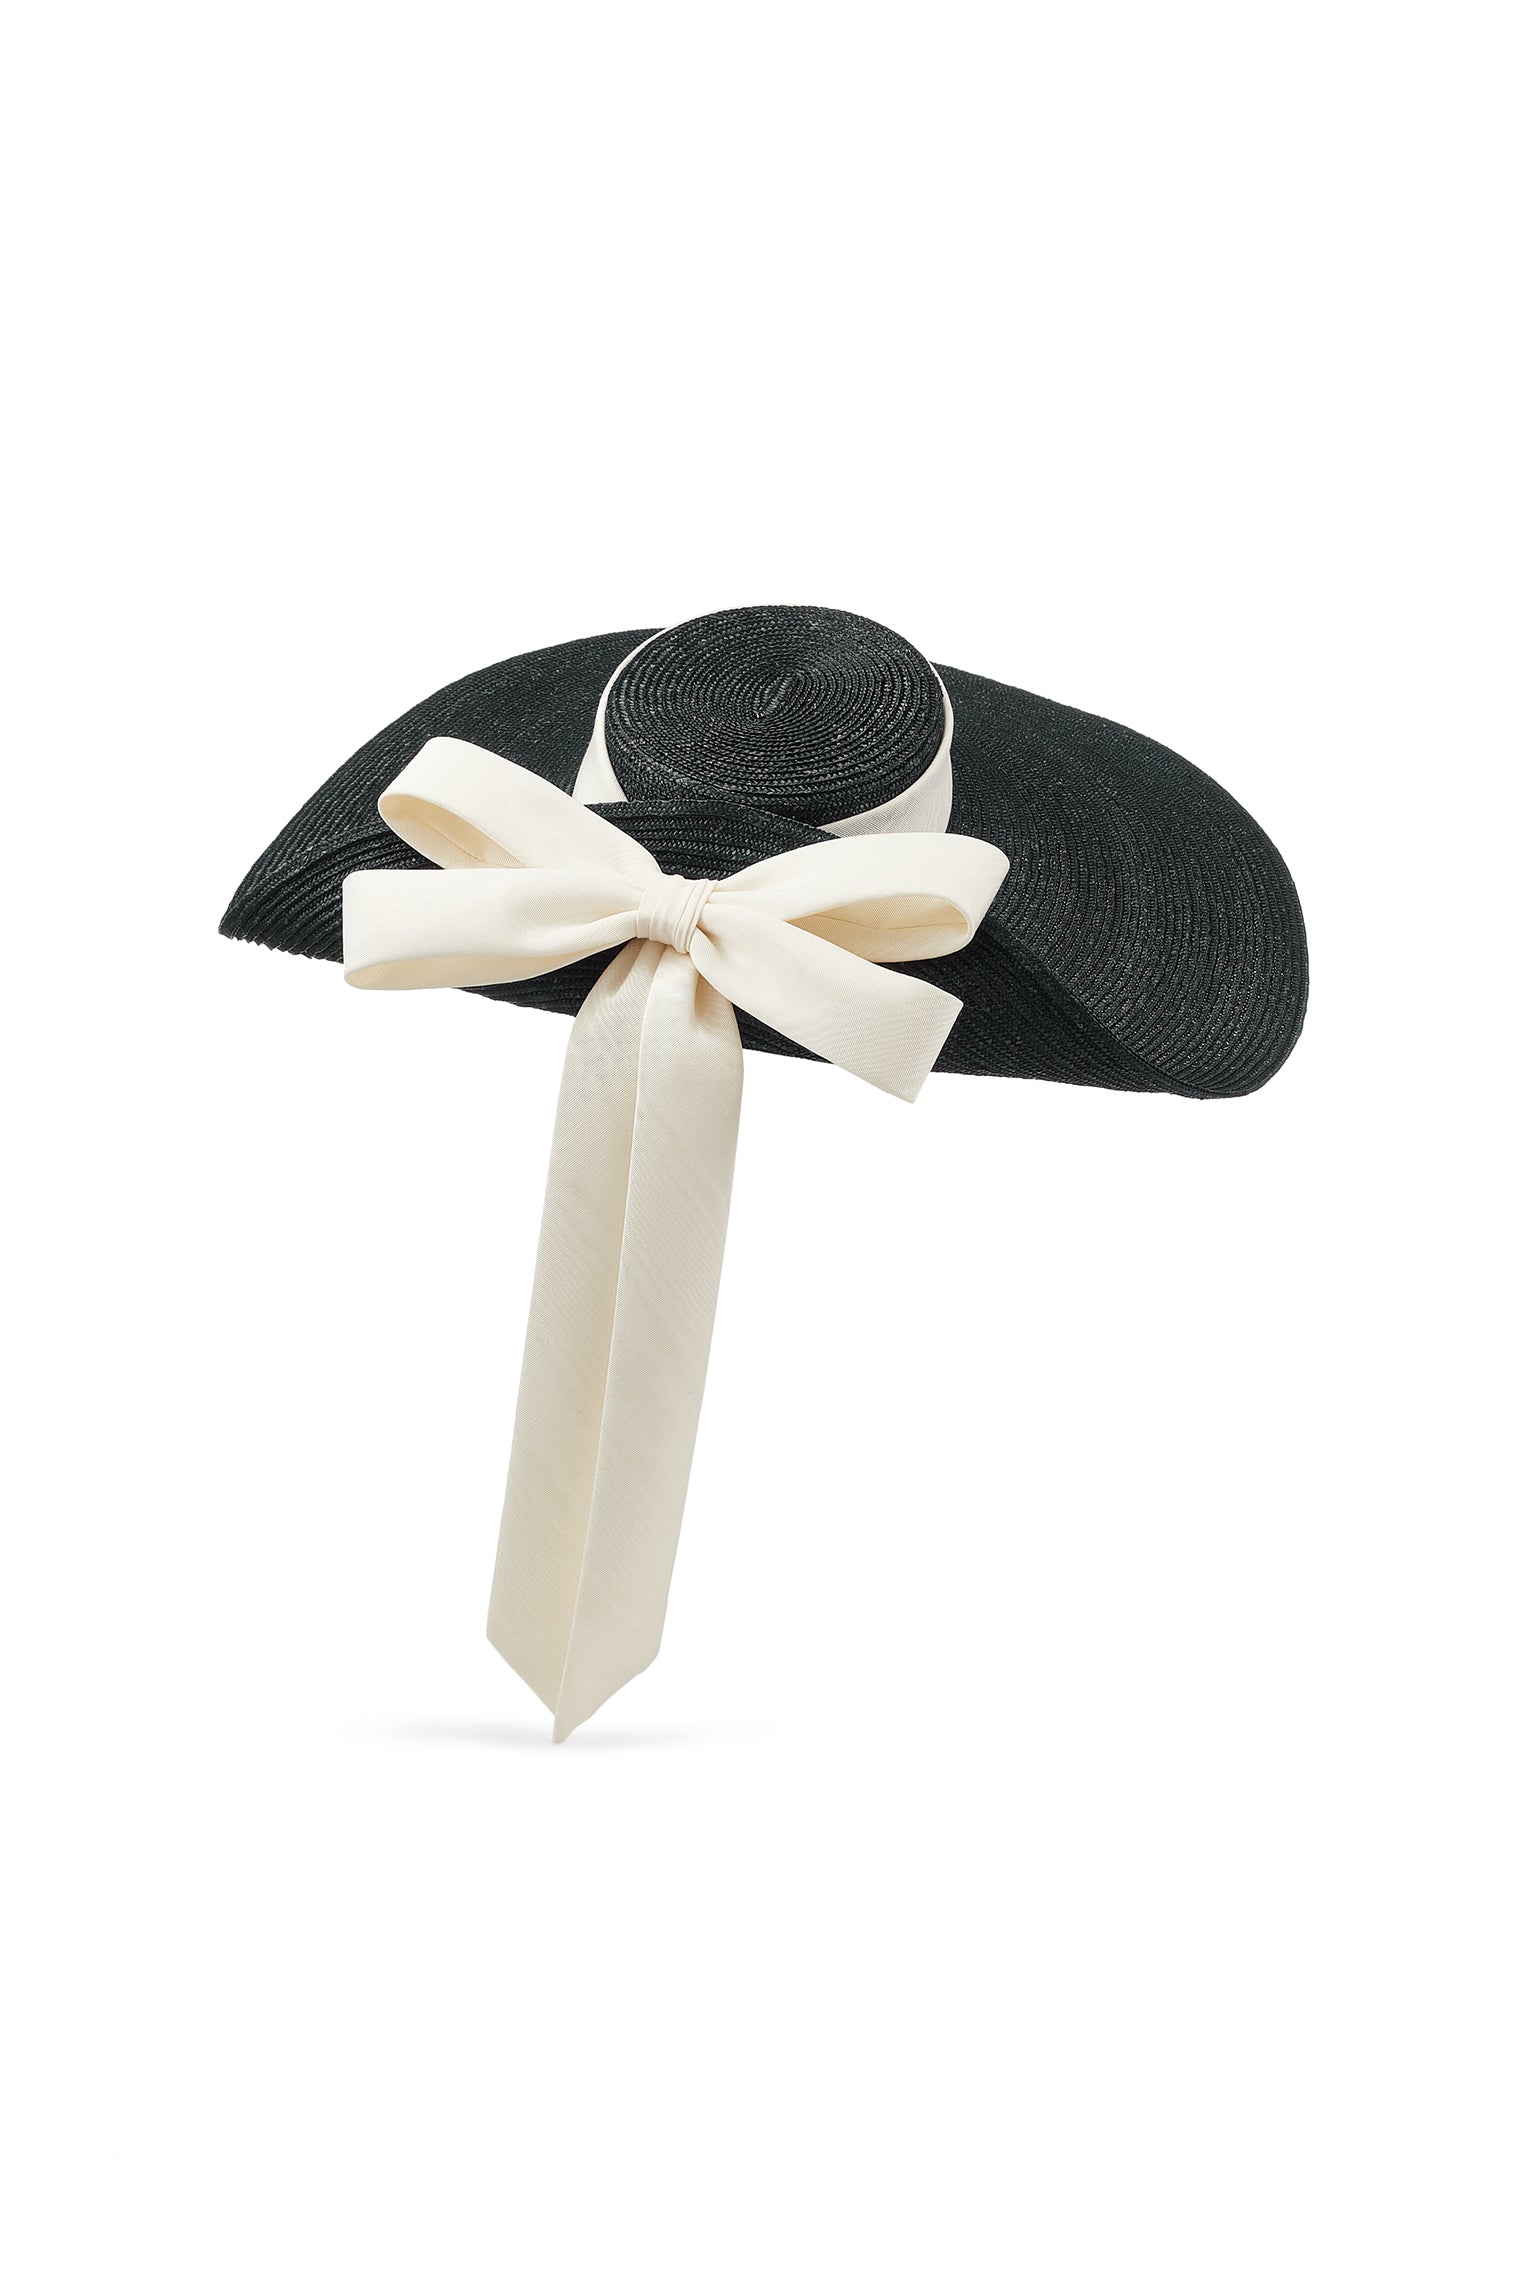 Lady Grey Black Wide Brim Hat - New Season Hat Collection - Lock & Co. Hatters London UK